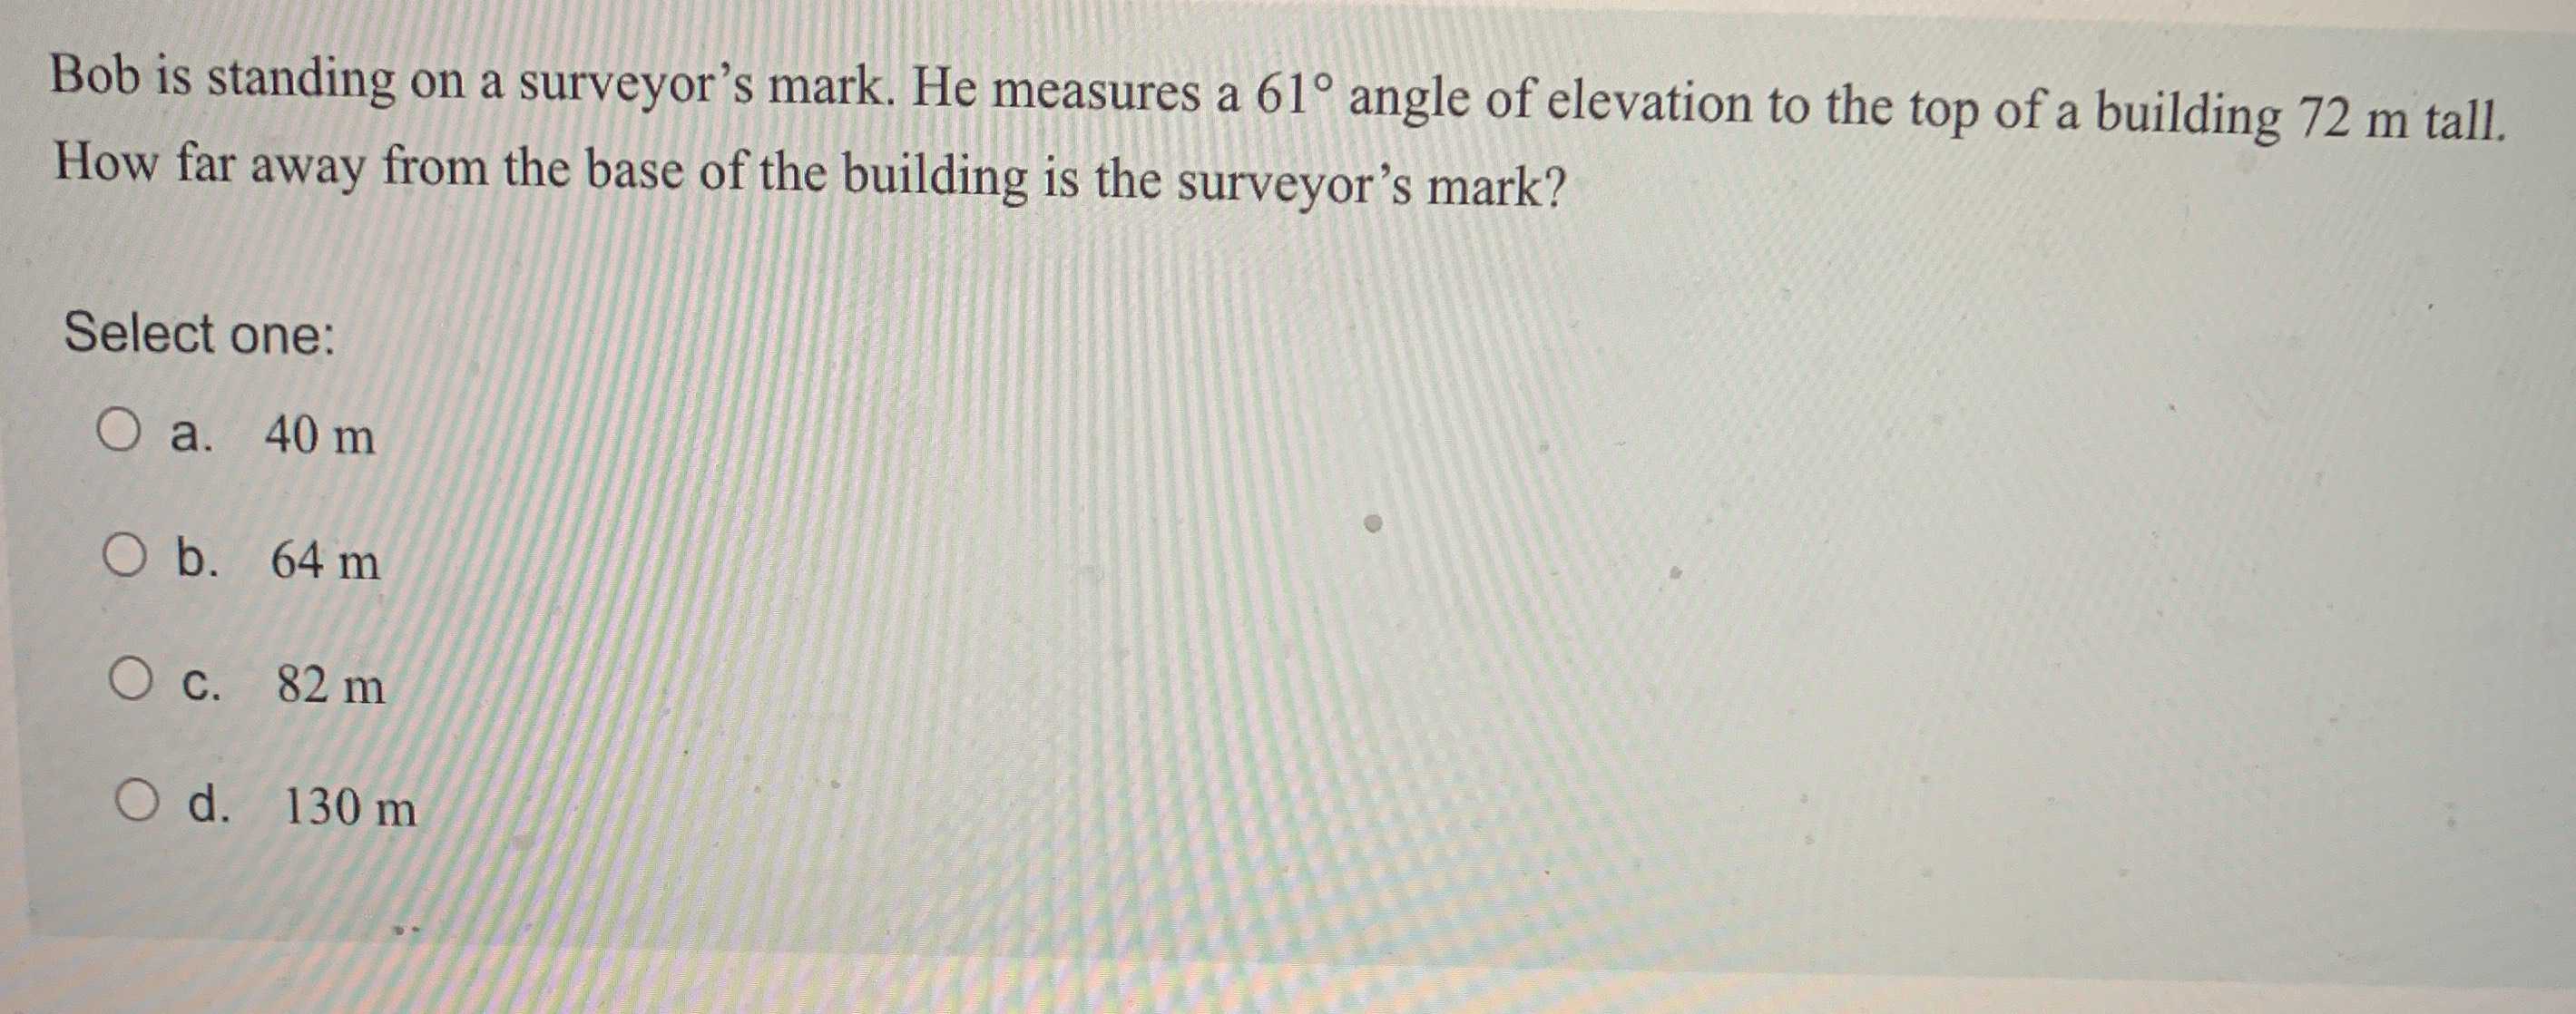 Bob is standing on a surveyor's mark. He measures ...